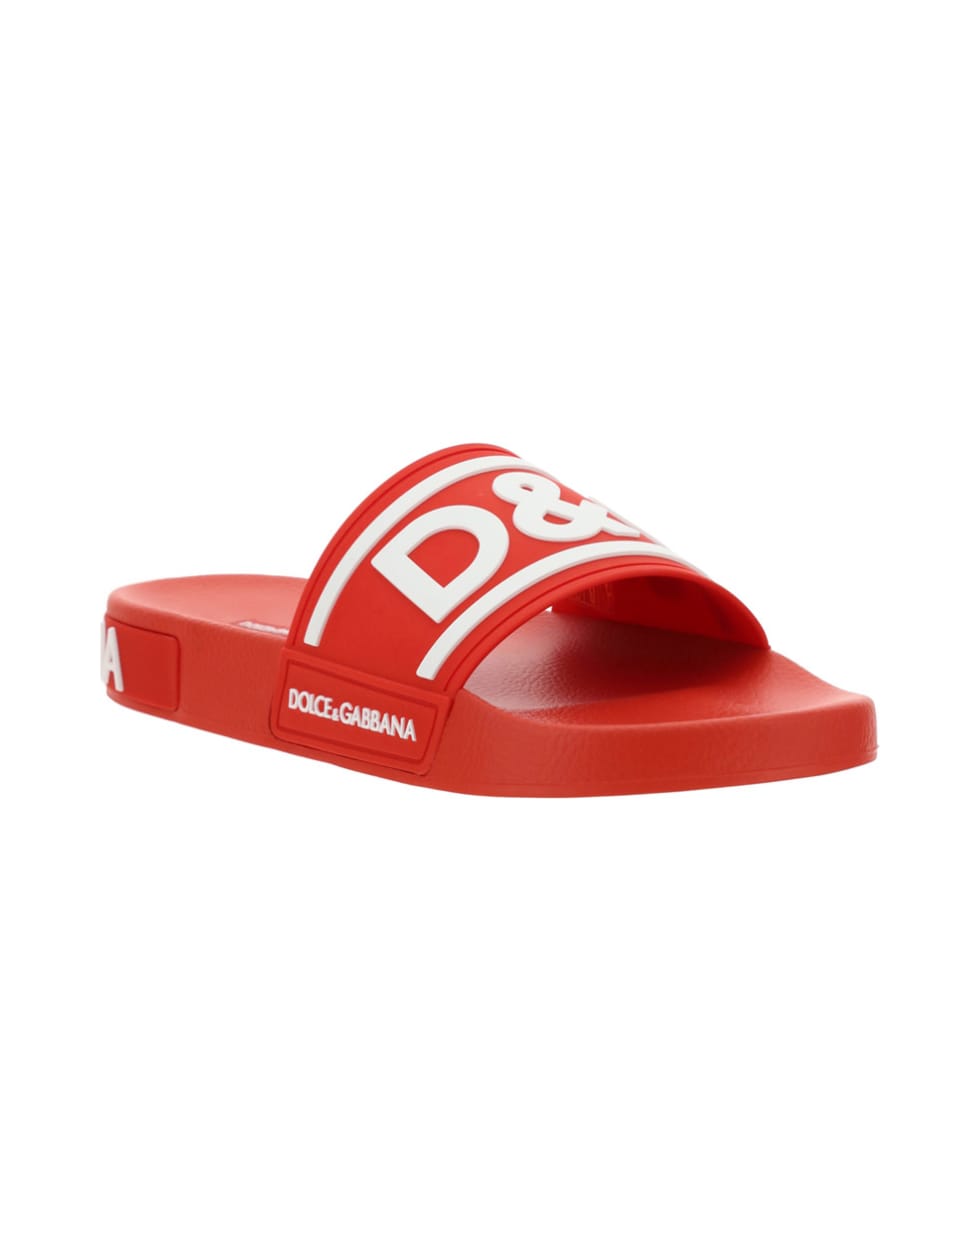 Dolce & Gabbana Slide Shoes - Rosso bianco